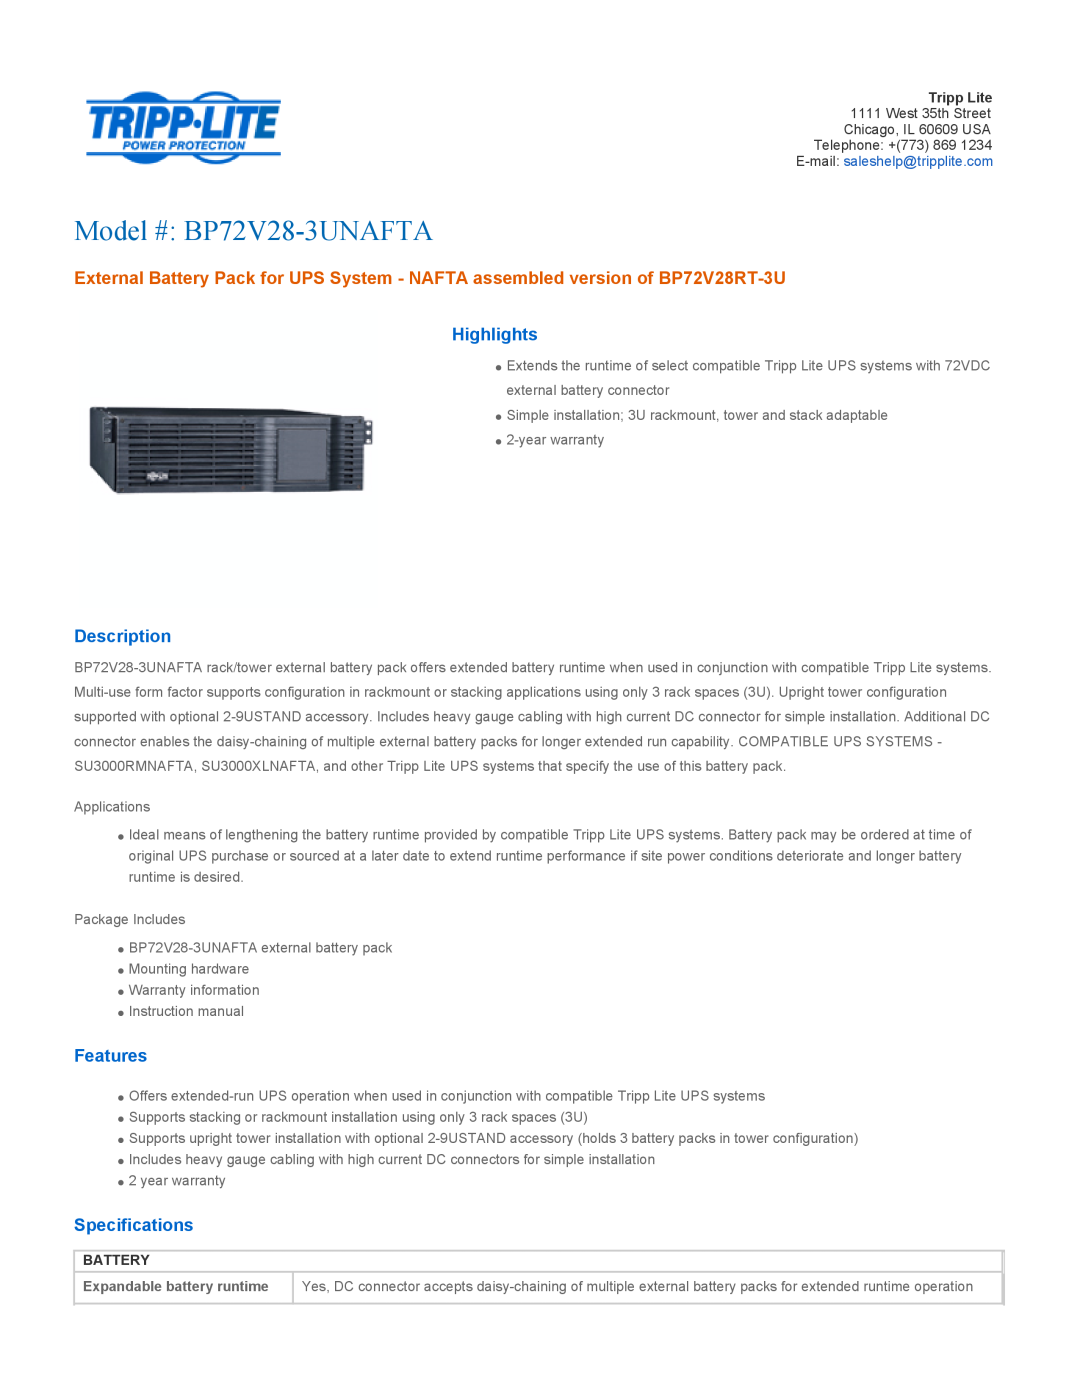 Tripp Lite BP72V28-3UNAFTA specifications Highlights, Description, Features, Specifications, Battery 